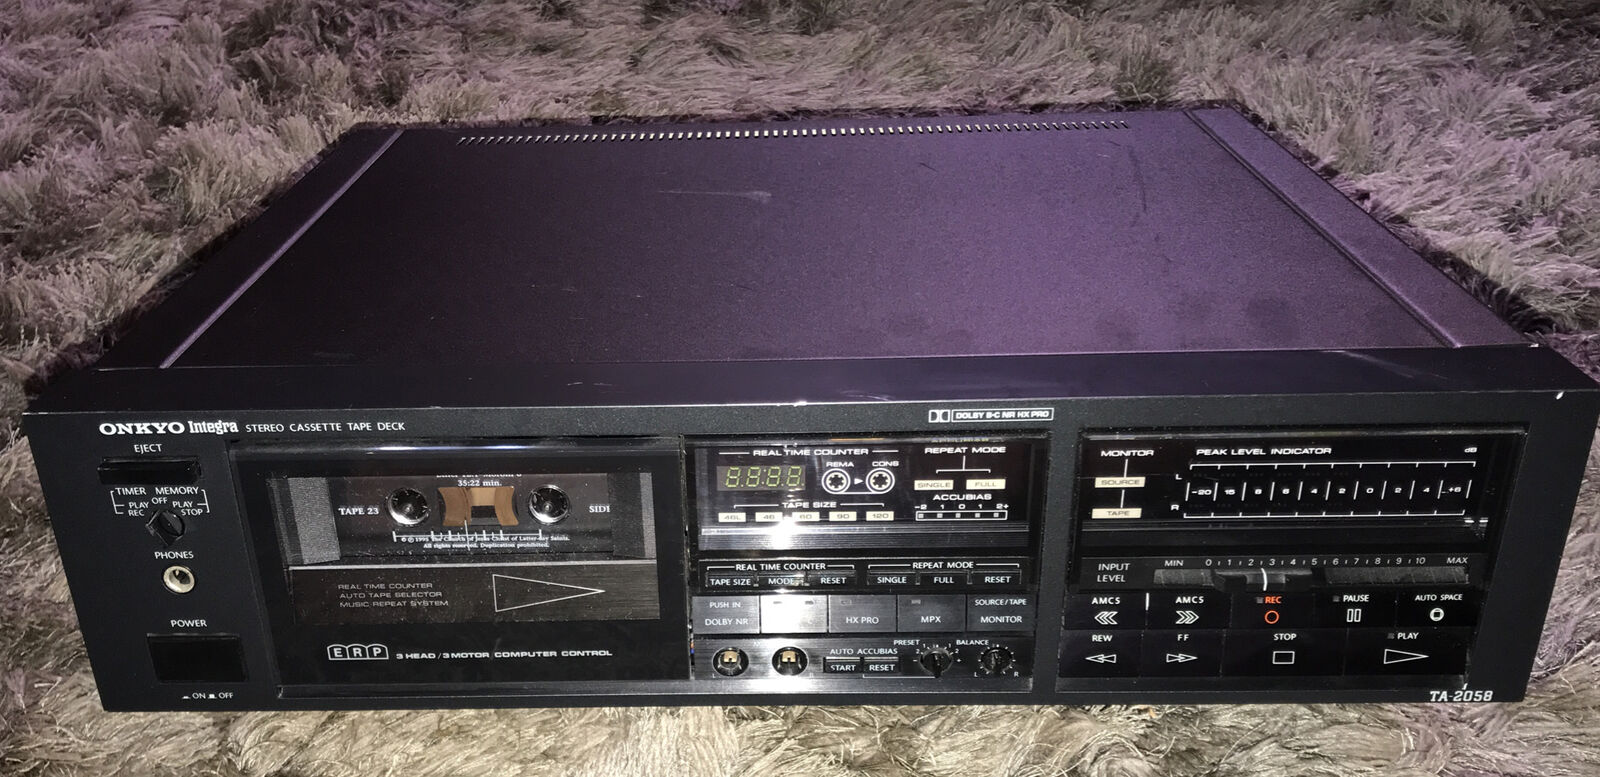 Onkyo Integra TA-2058 Cassette Deck Working But Needs A New Belt To Play Tapes